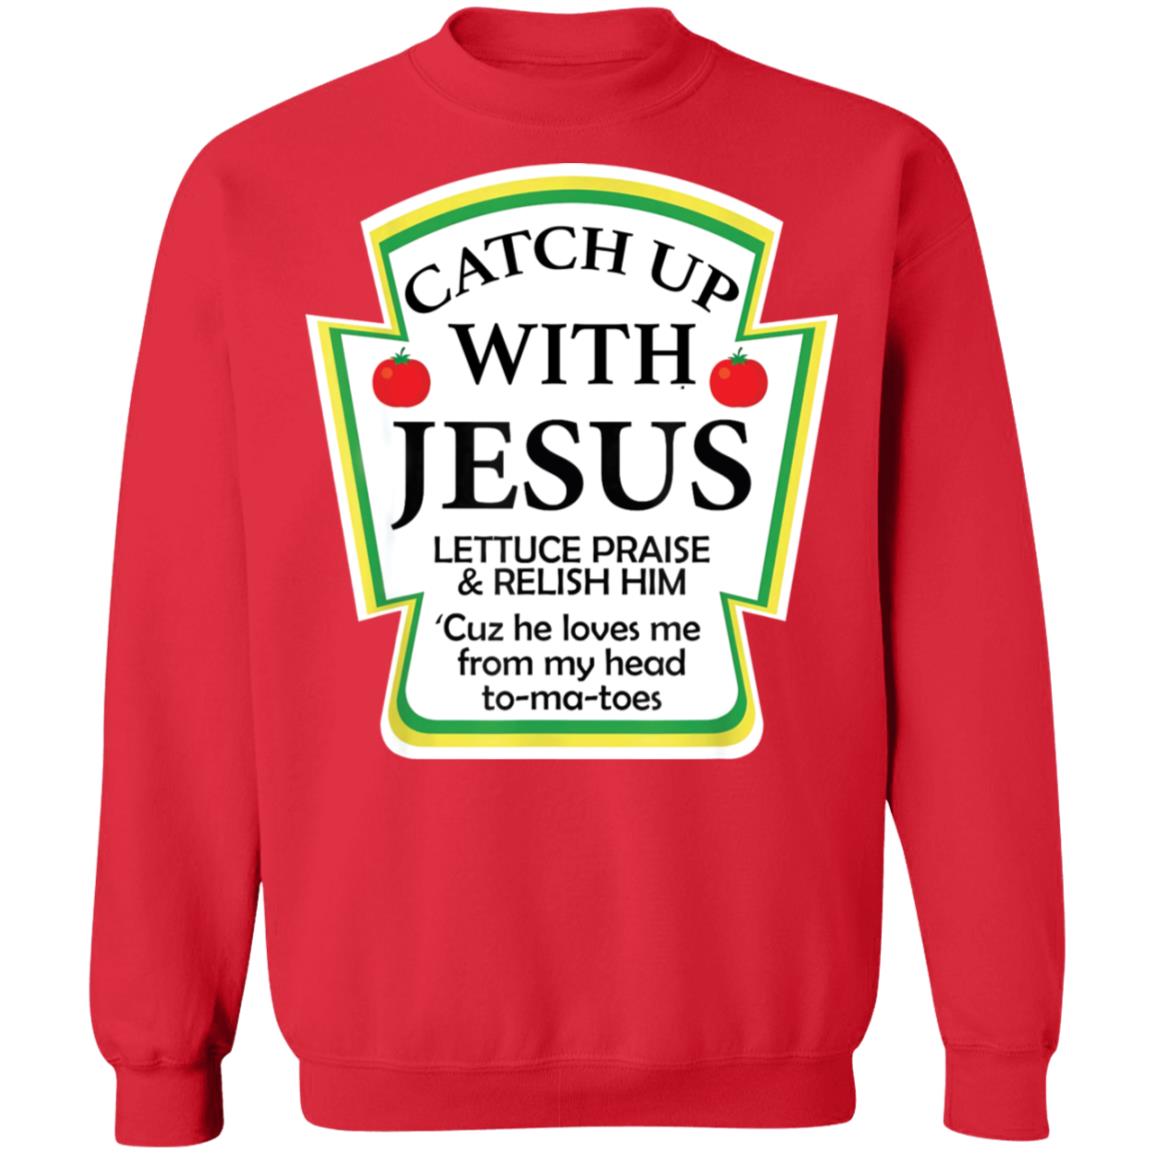 Catch Up With Jesus Lettuce Praise And Relish Shirt - Lelemoon